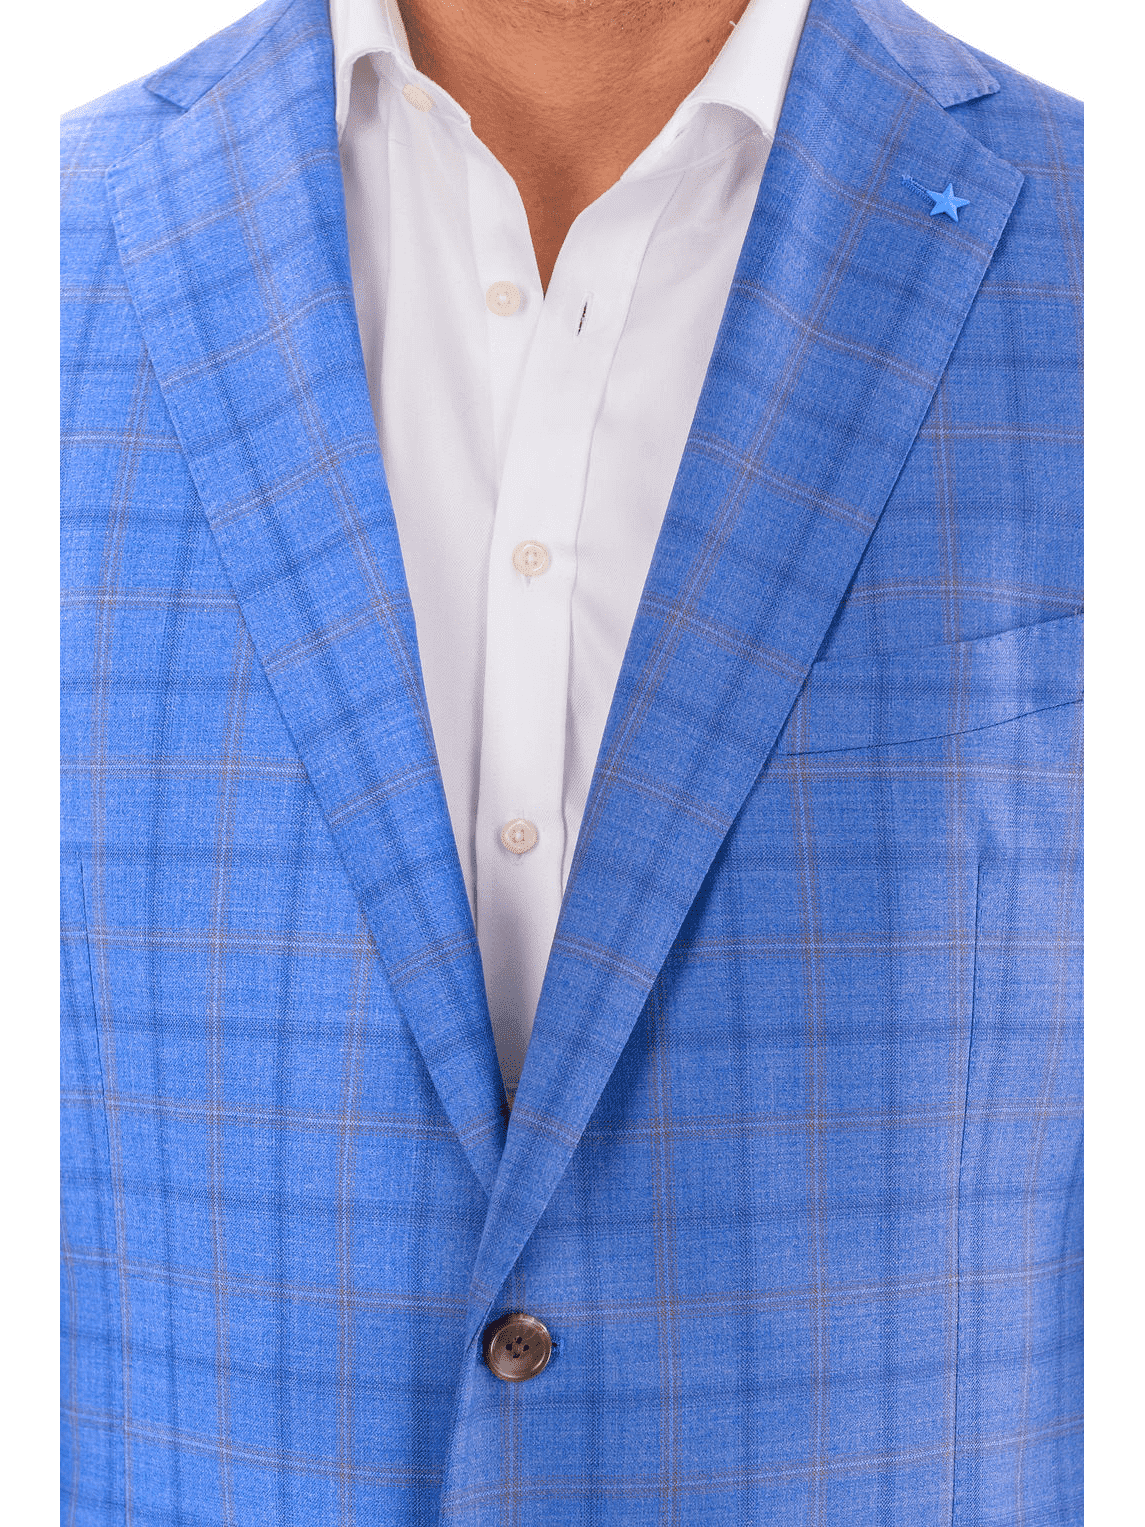 Blujacket Blujacket Mens Light Blue Plaid Regular Fit 100% Wool Blazer Sportcoat